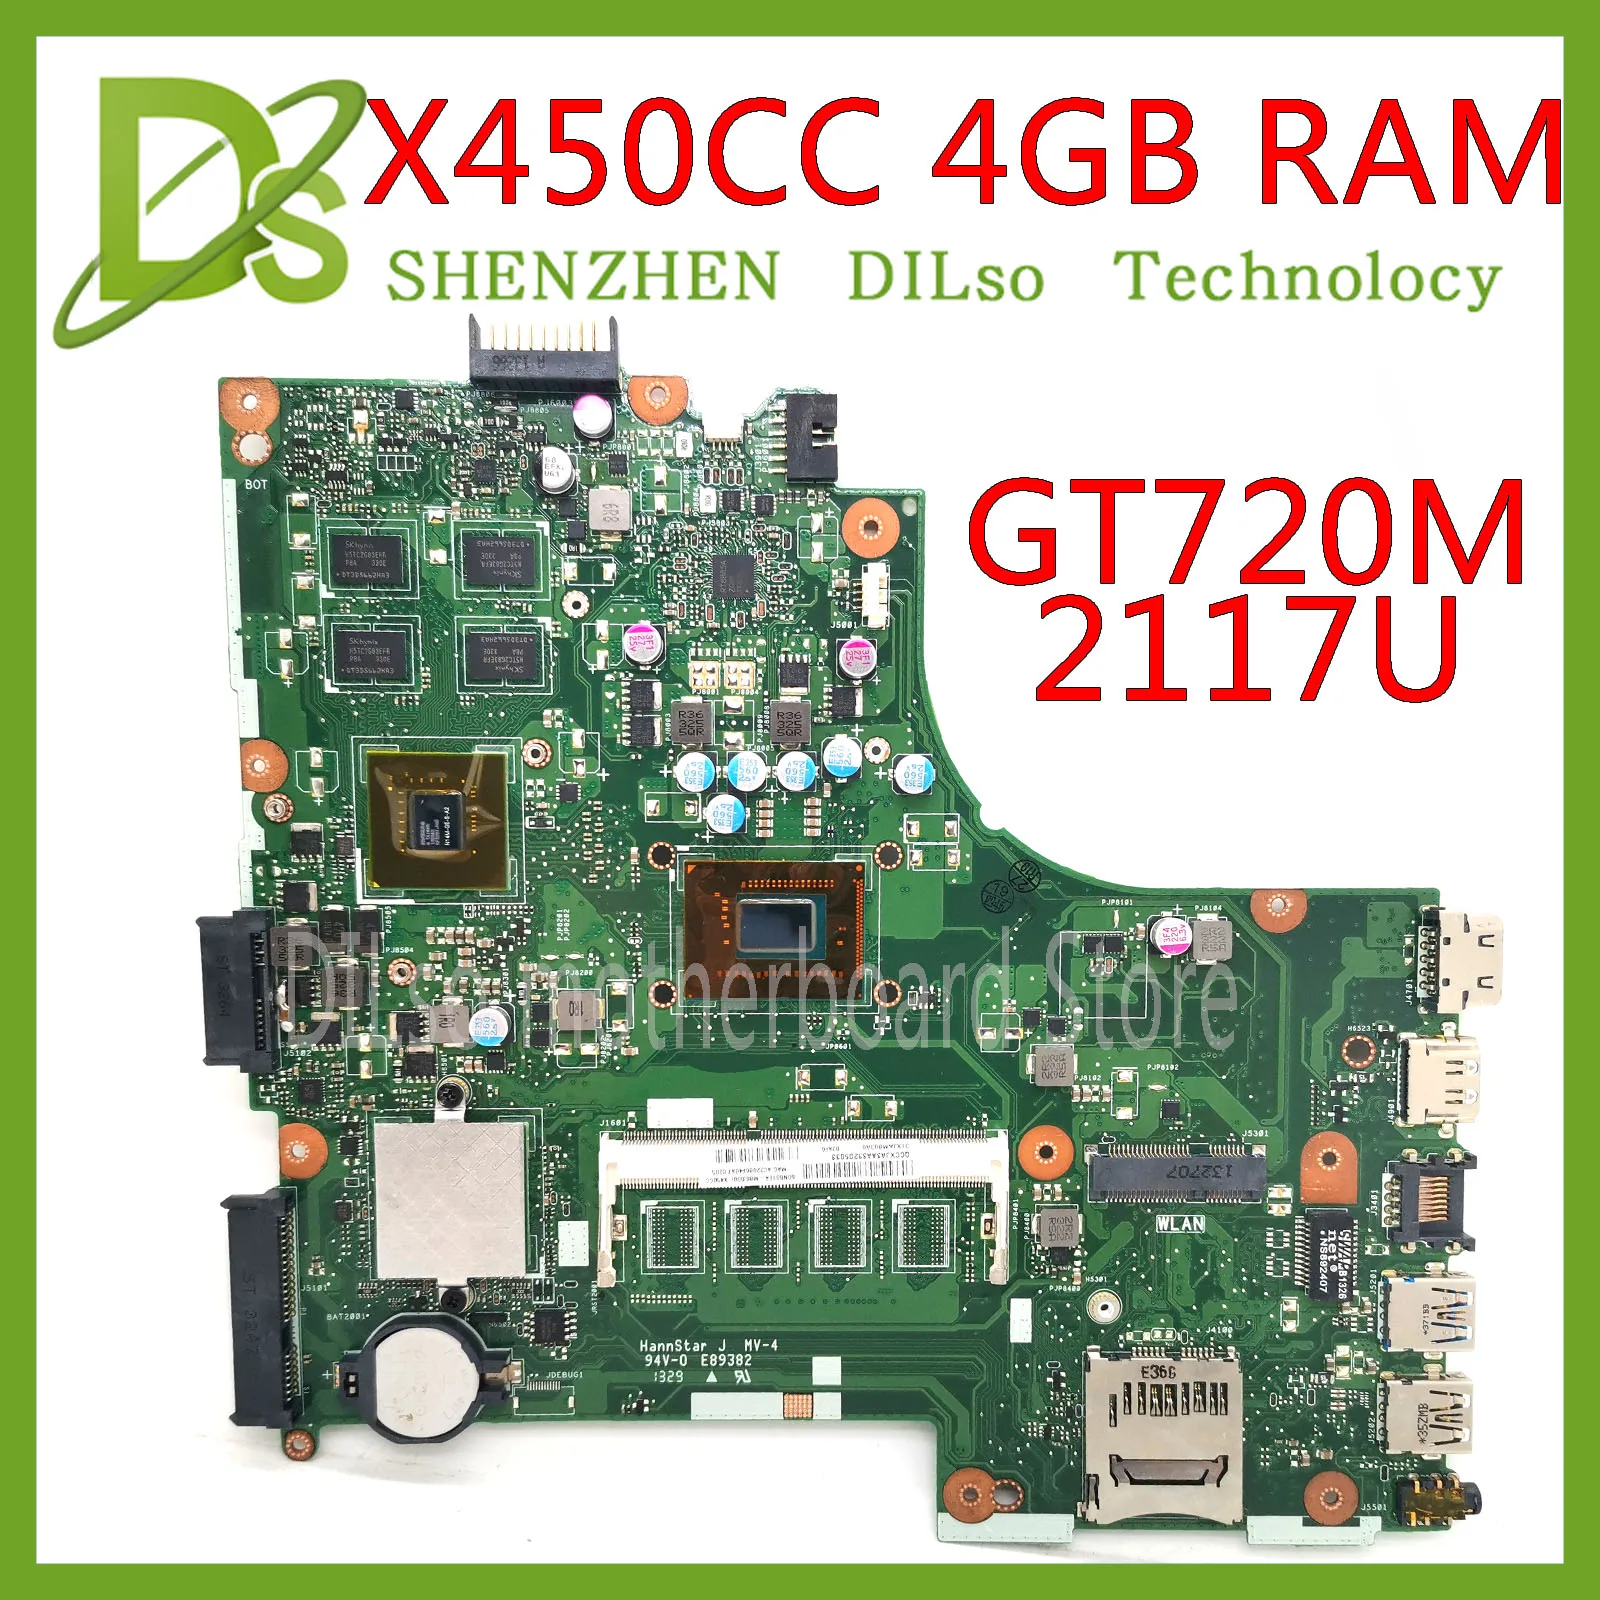 KEFU X450VC Motherboard For ASUS X450VC X450CC Laptop Motherboard original Test Mainboard 2117U CPU GT720M GPU